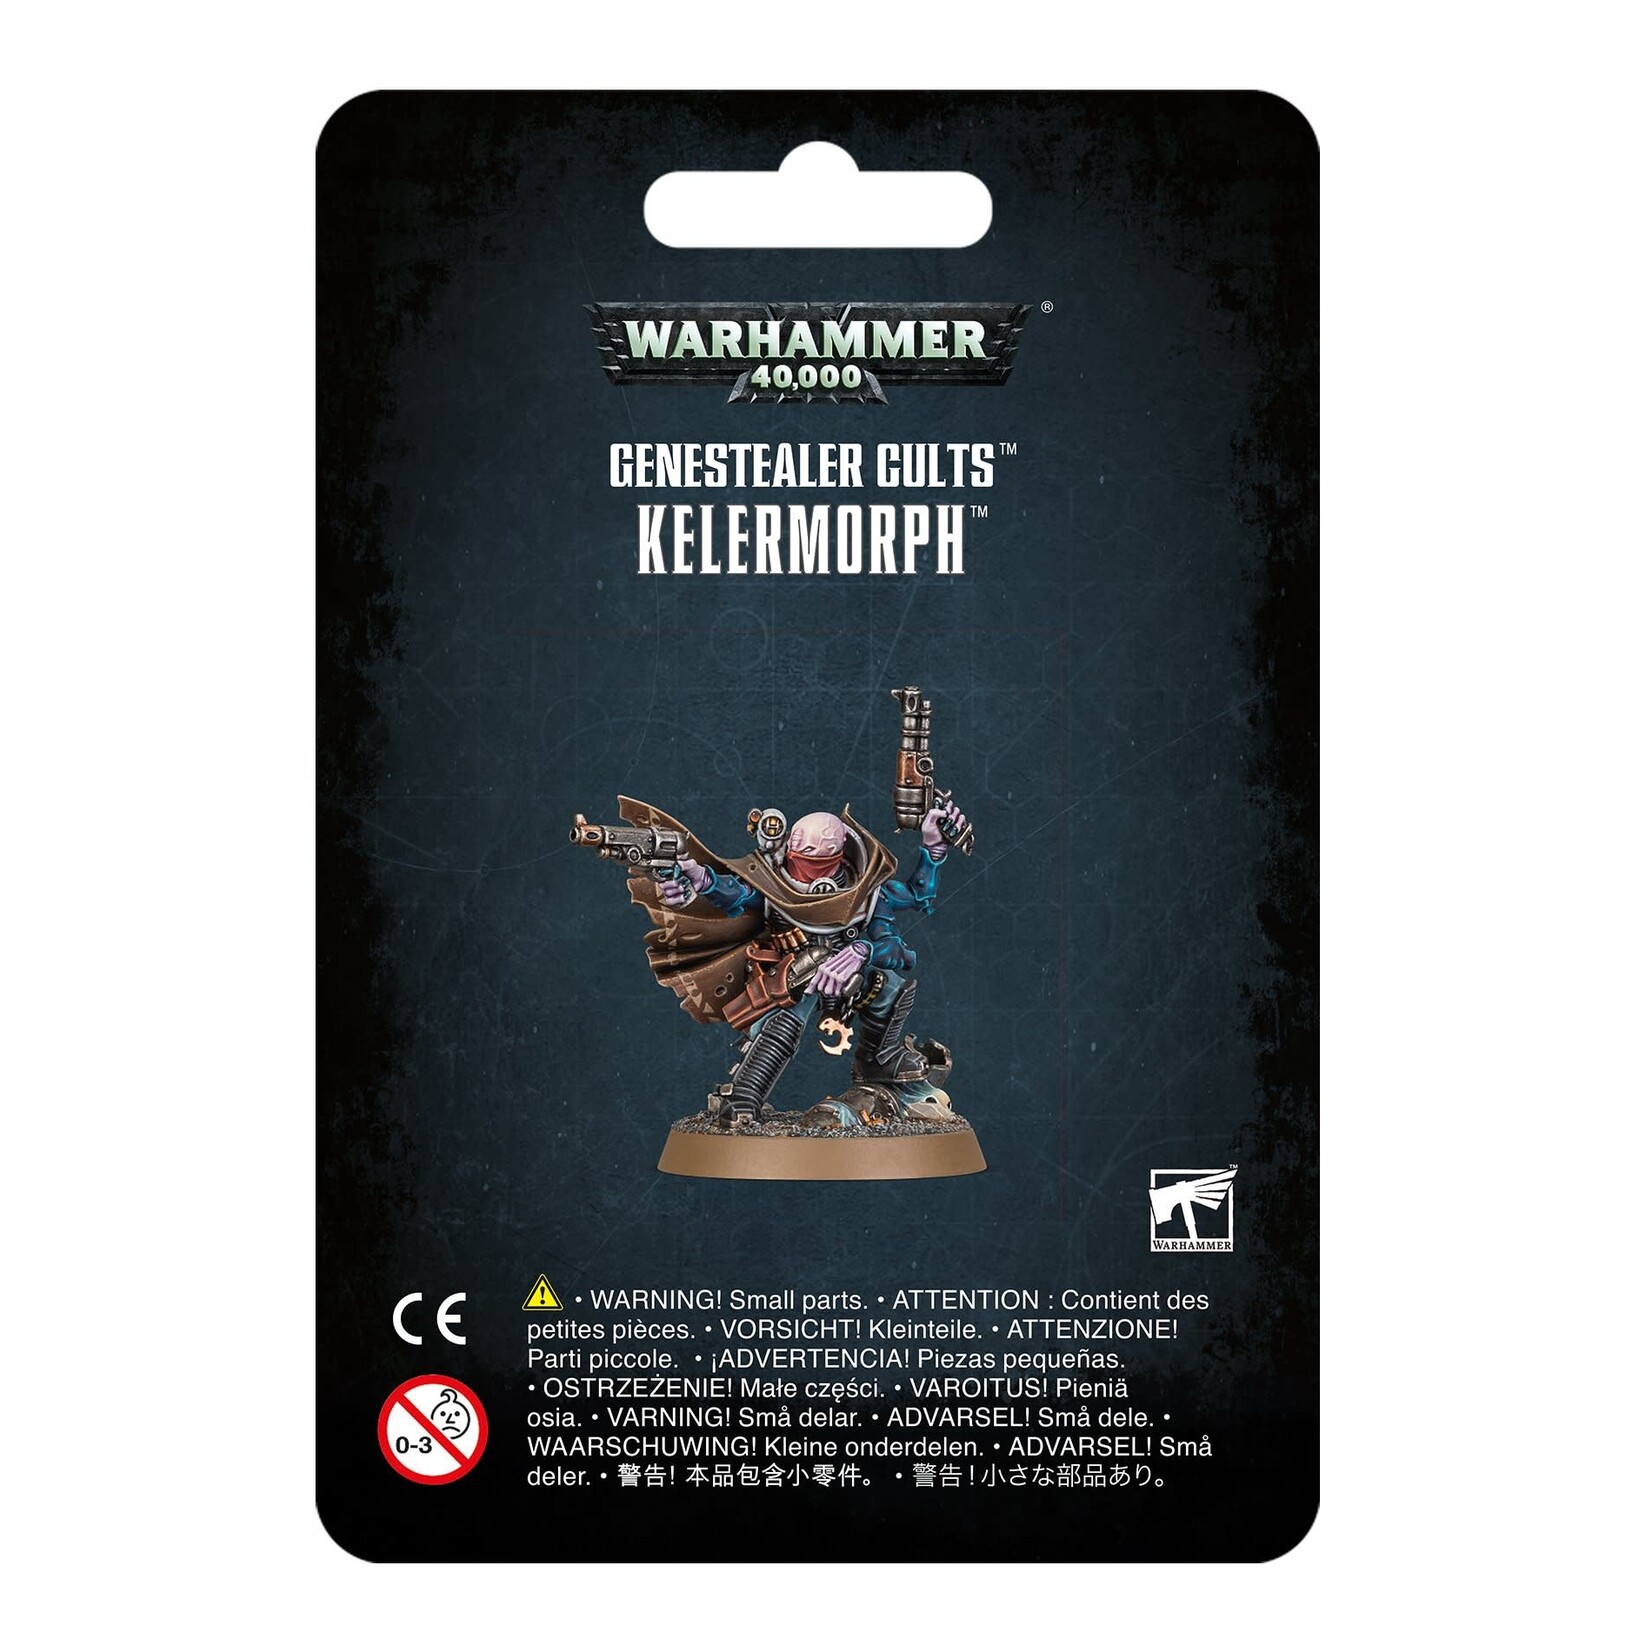 Warhammer 40k Warhammer 40k: Genestealer Cults: Kelermorph